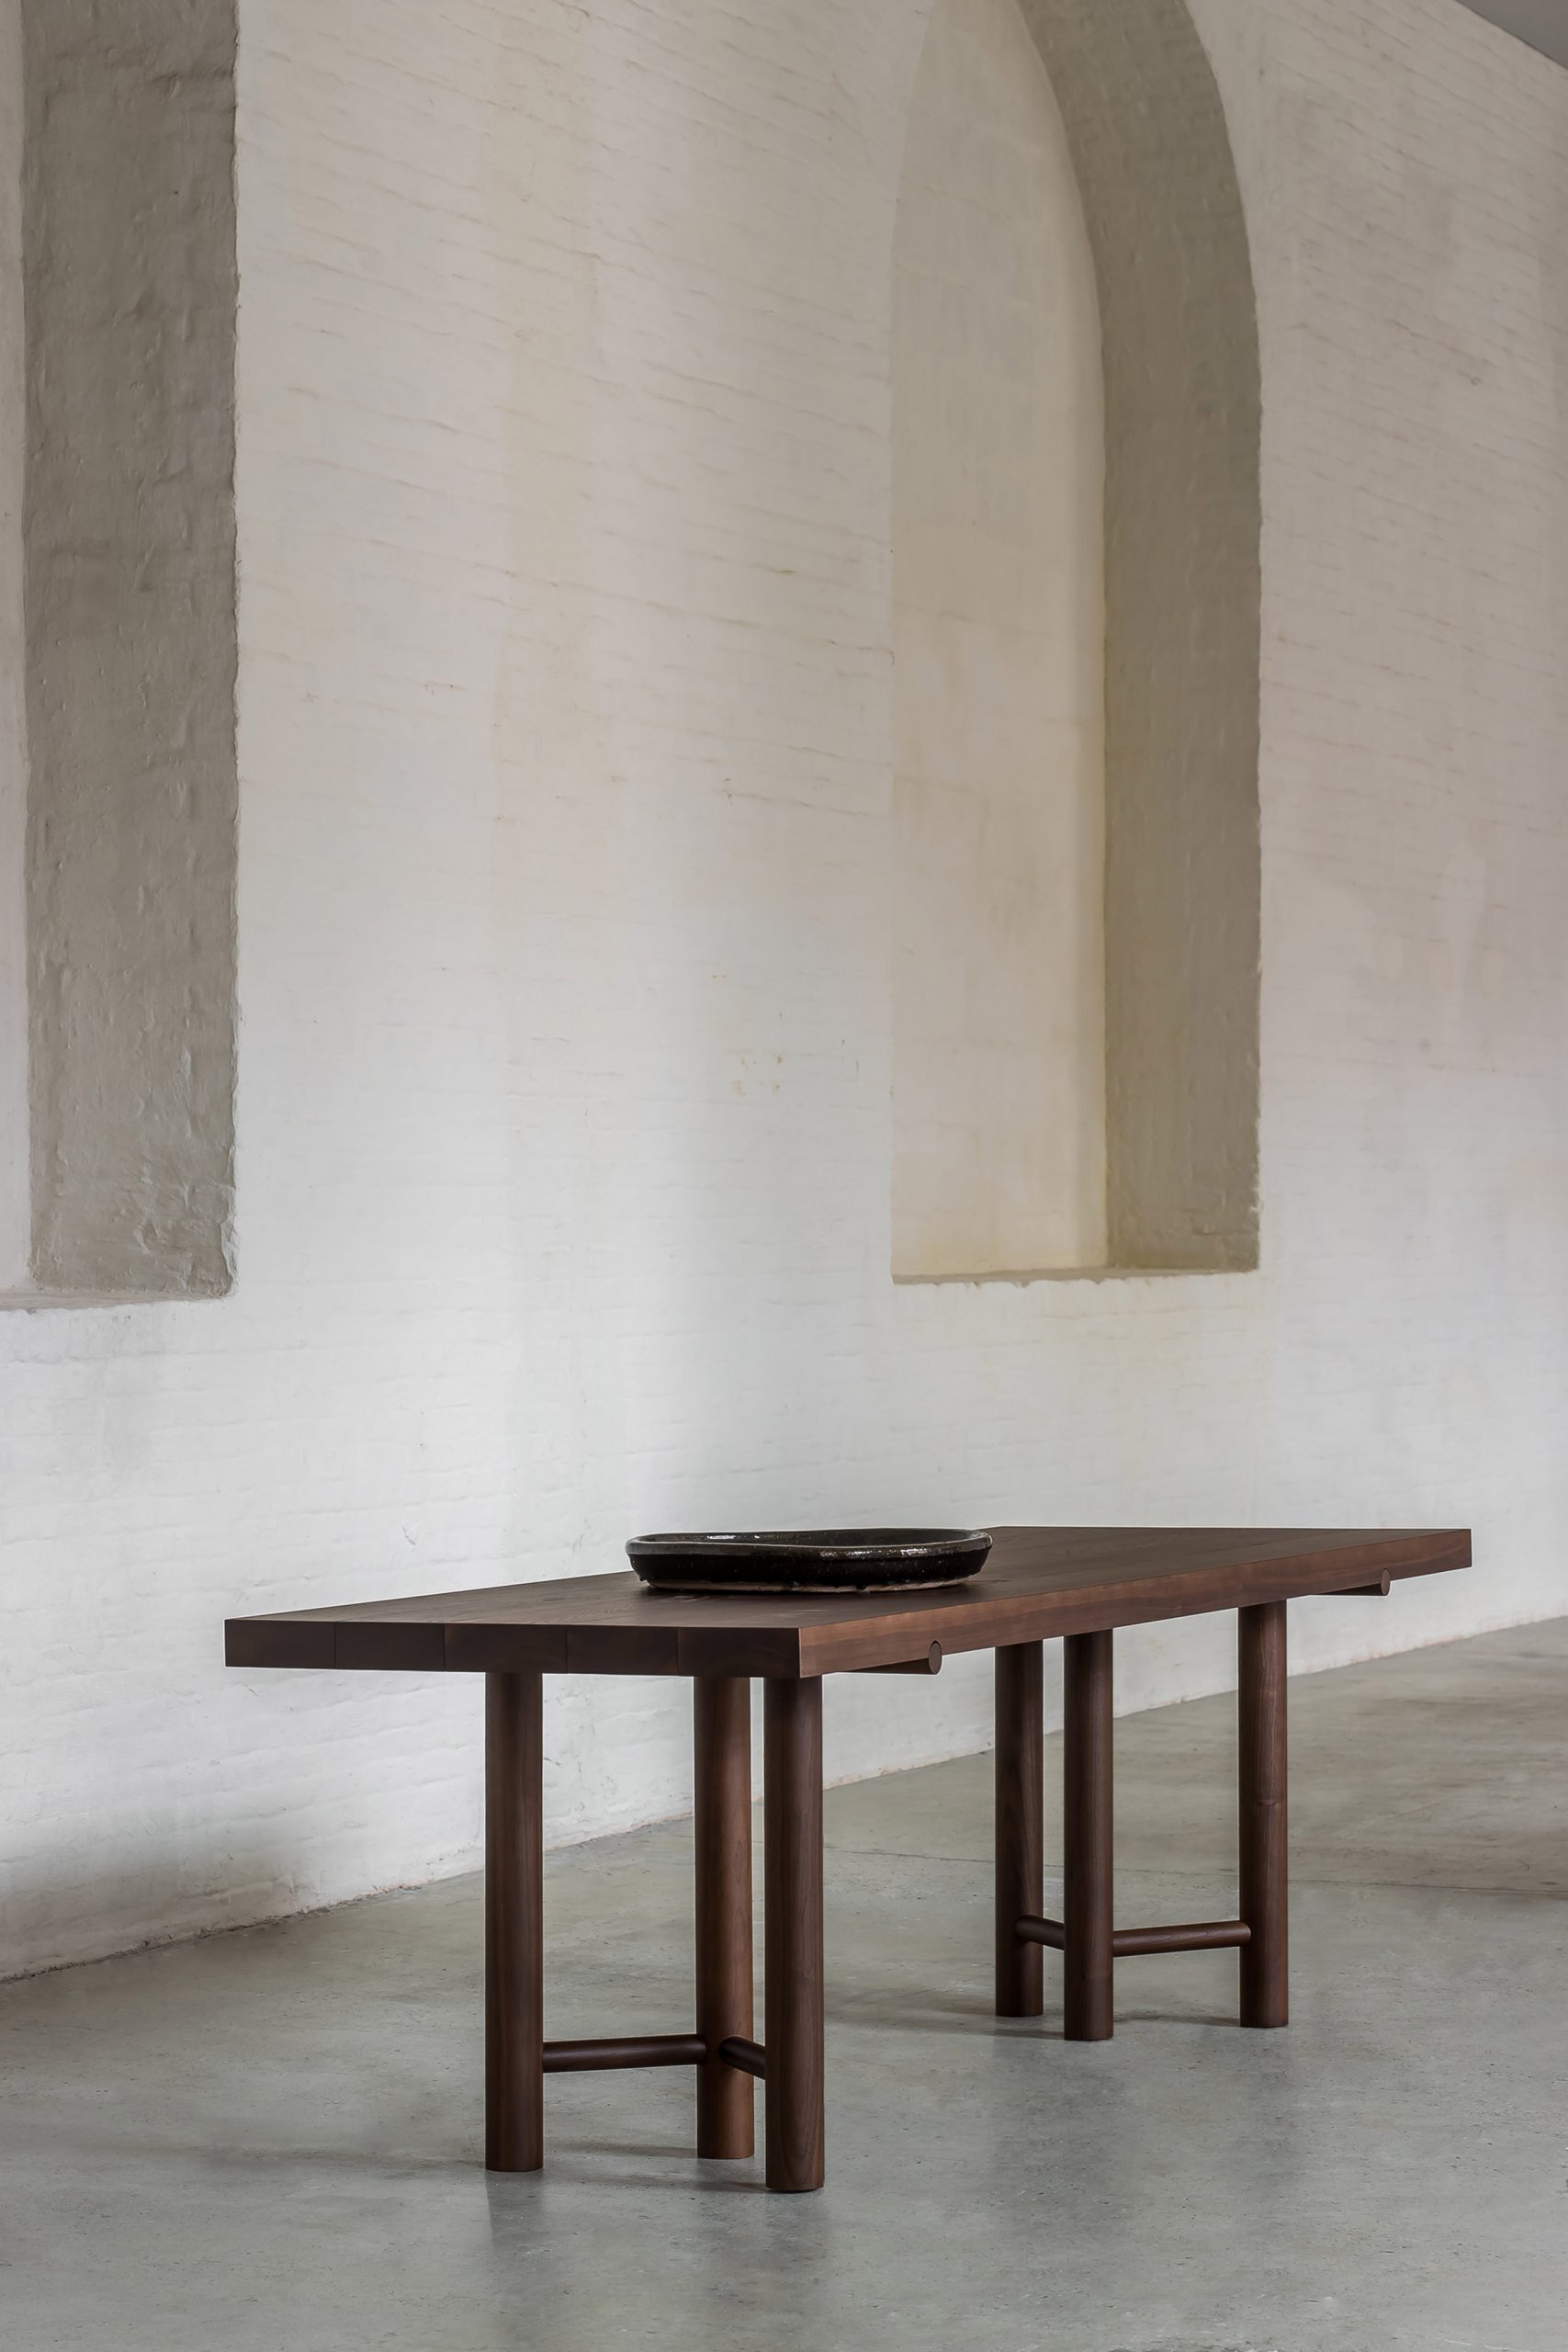 Rectangular table in Nomad furniture by Nathalie Deboel